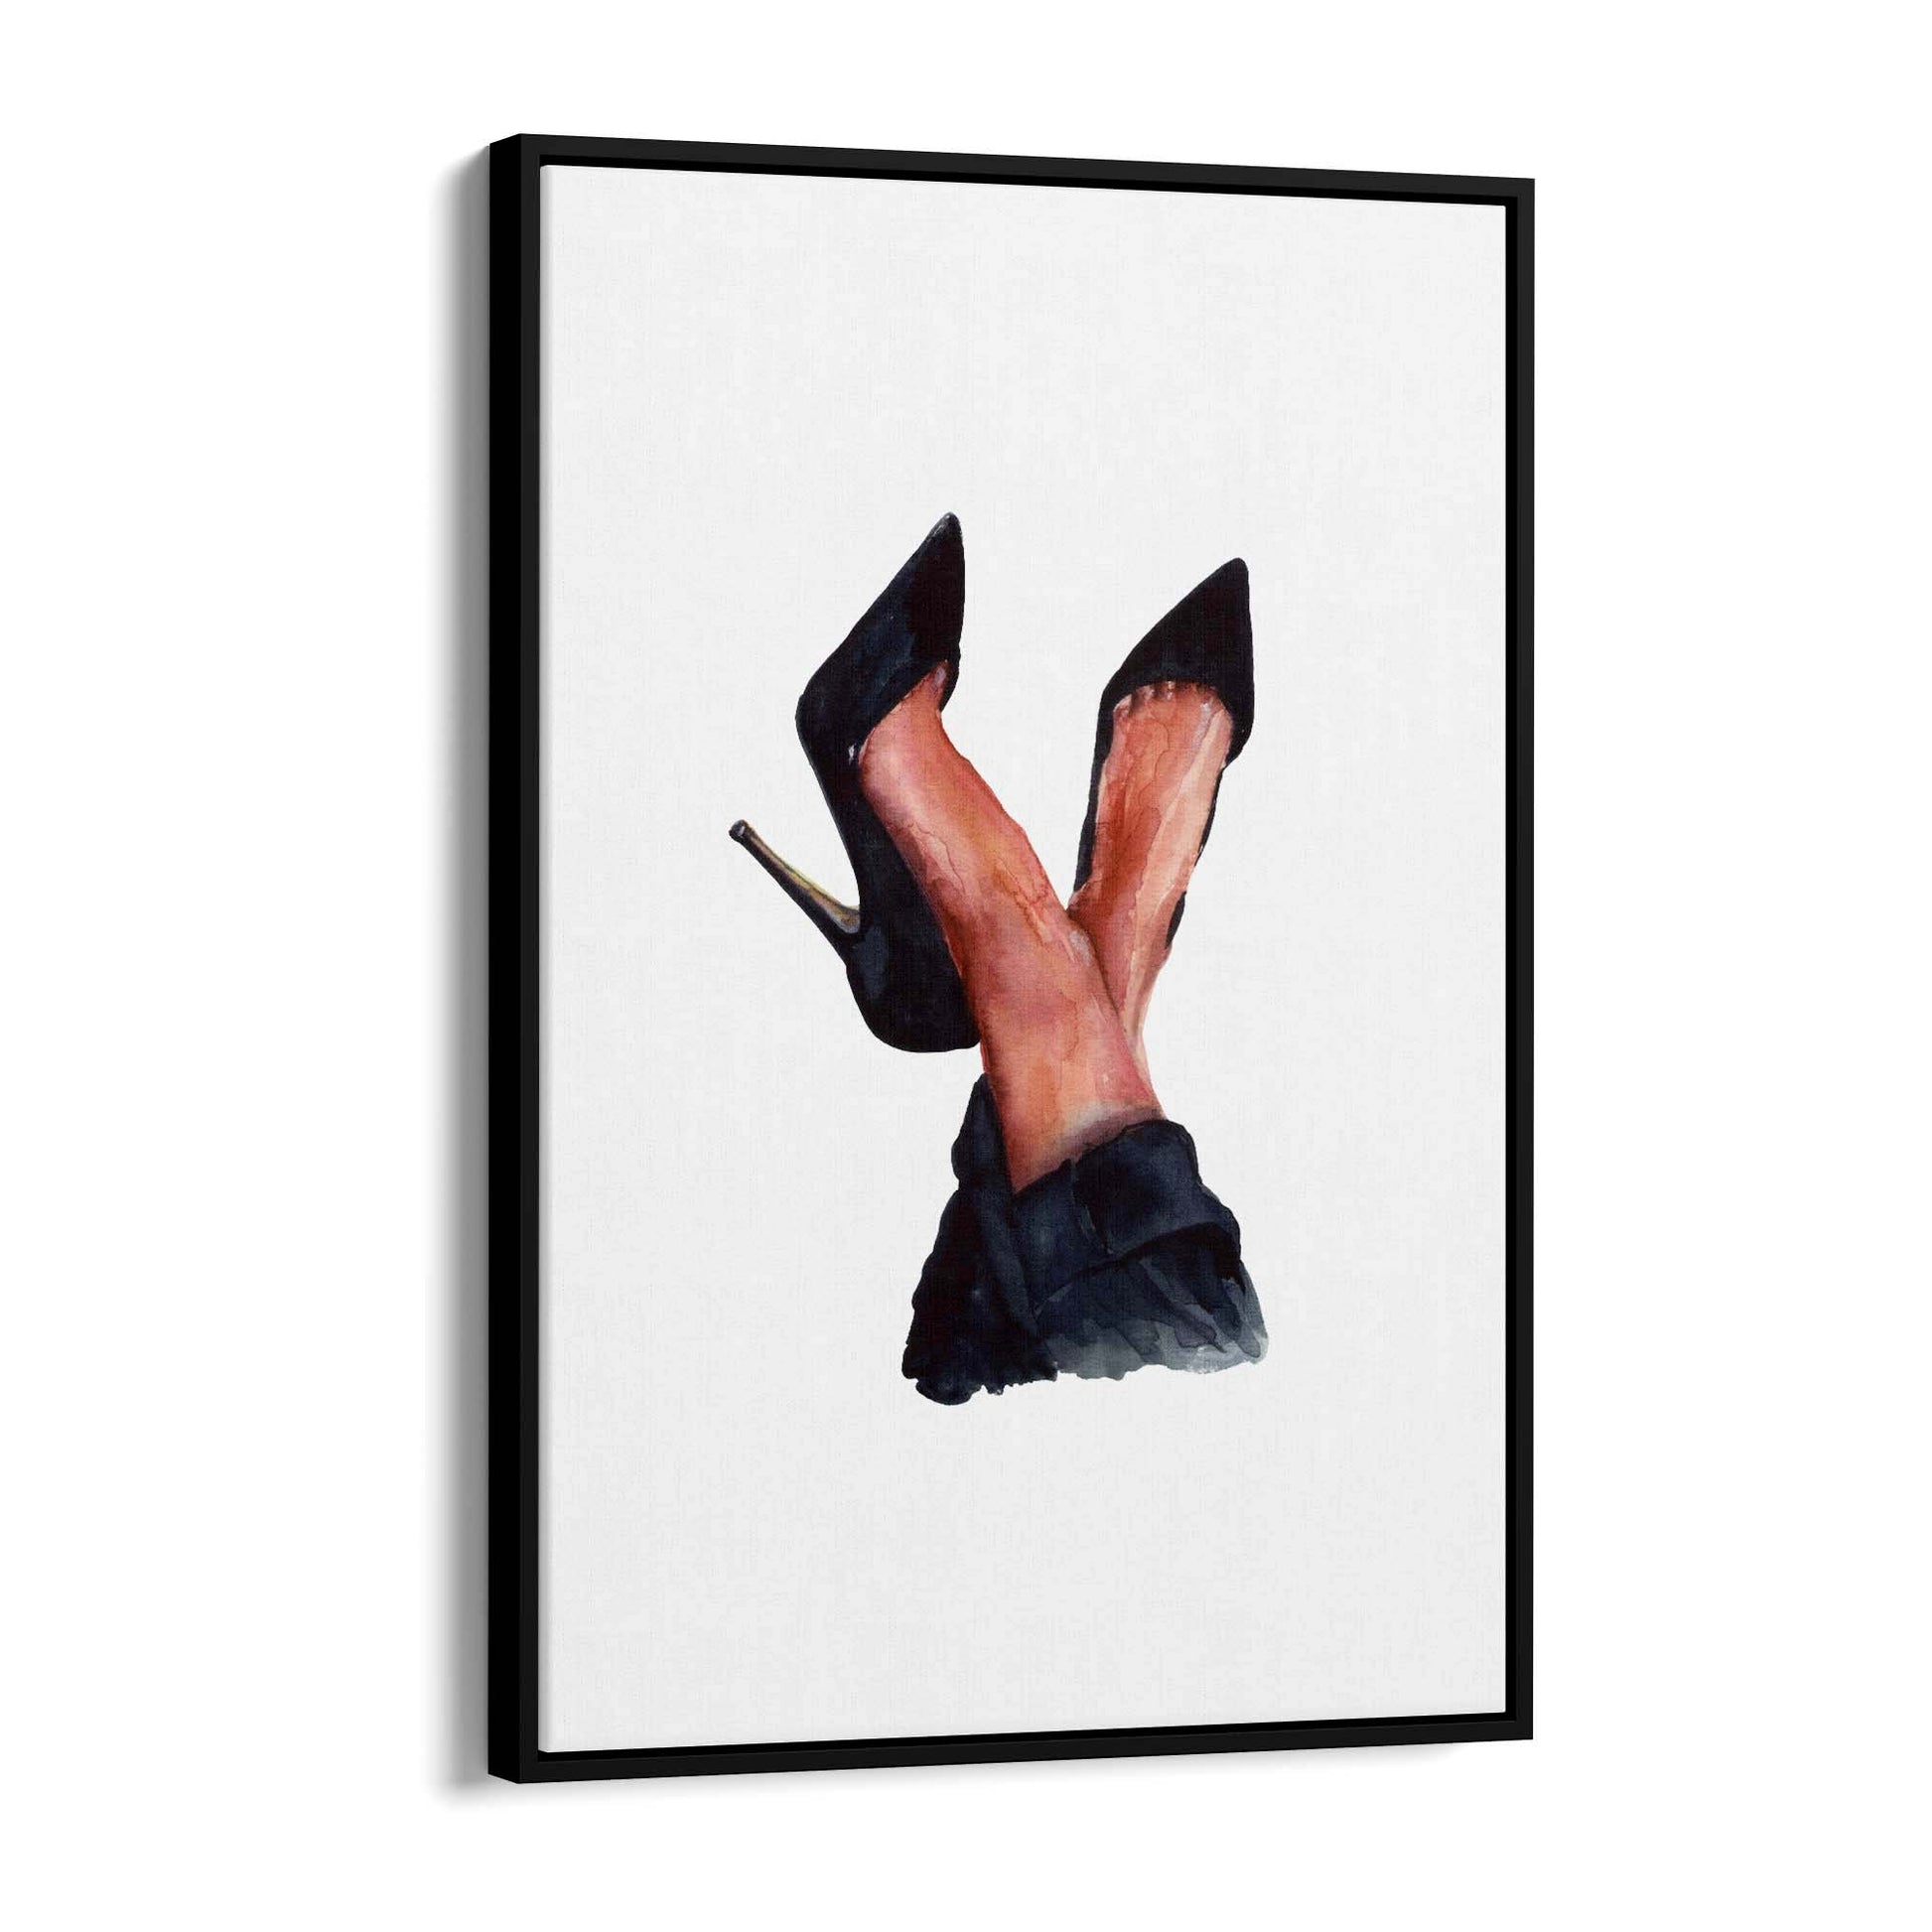 Cute Black Heels Fashion Girls Bedroom Wall Art #3 - The Affordable Art Company